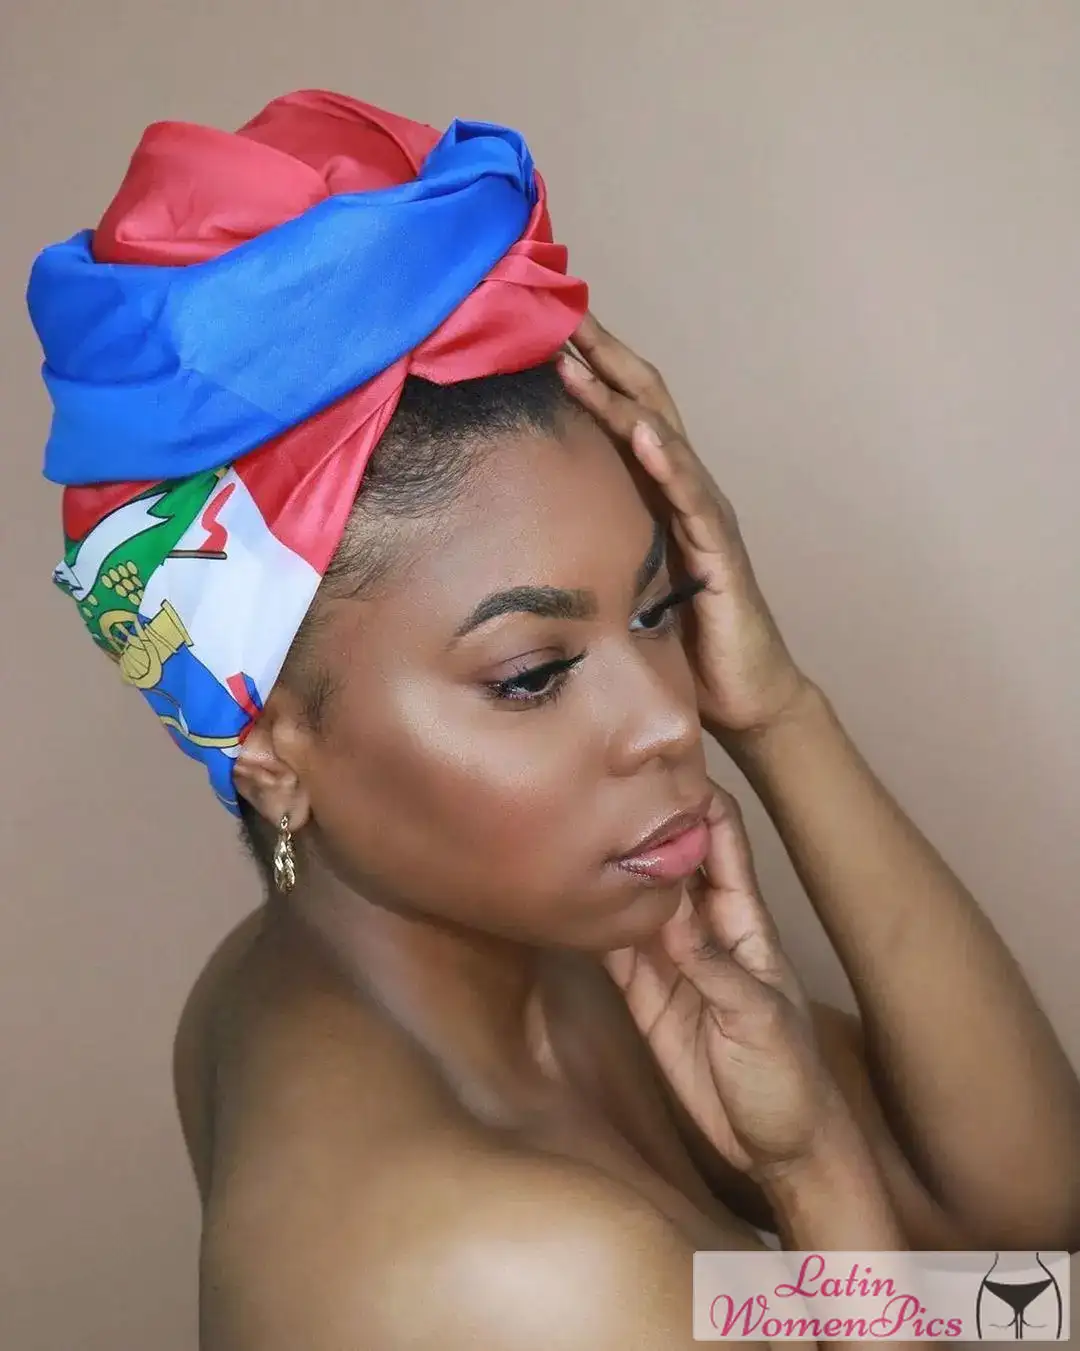 exquisite Haitian woman image